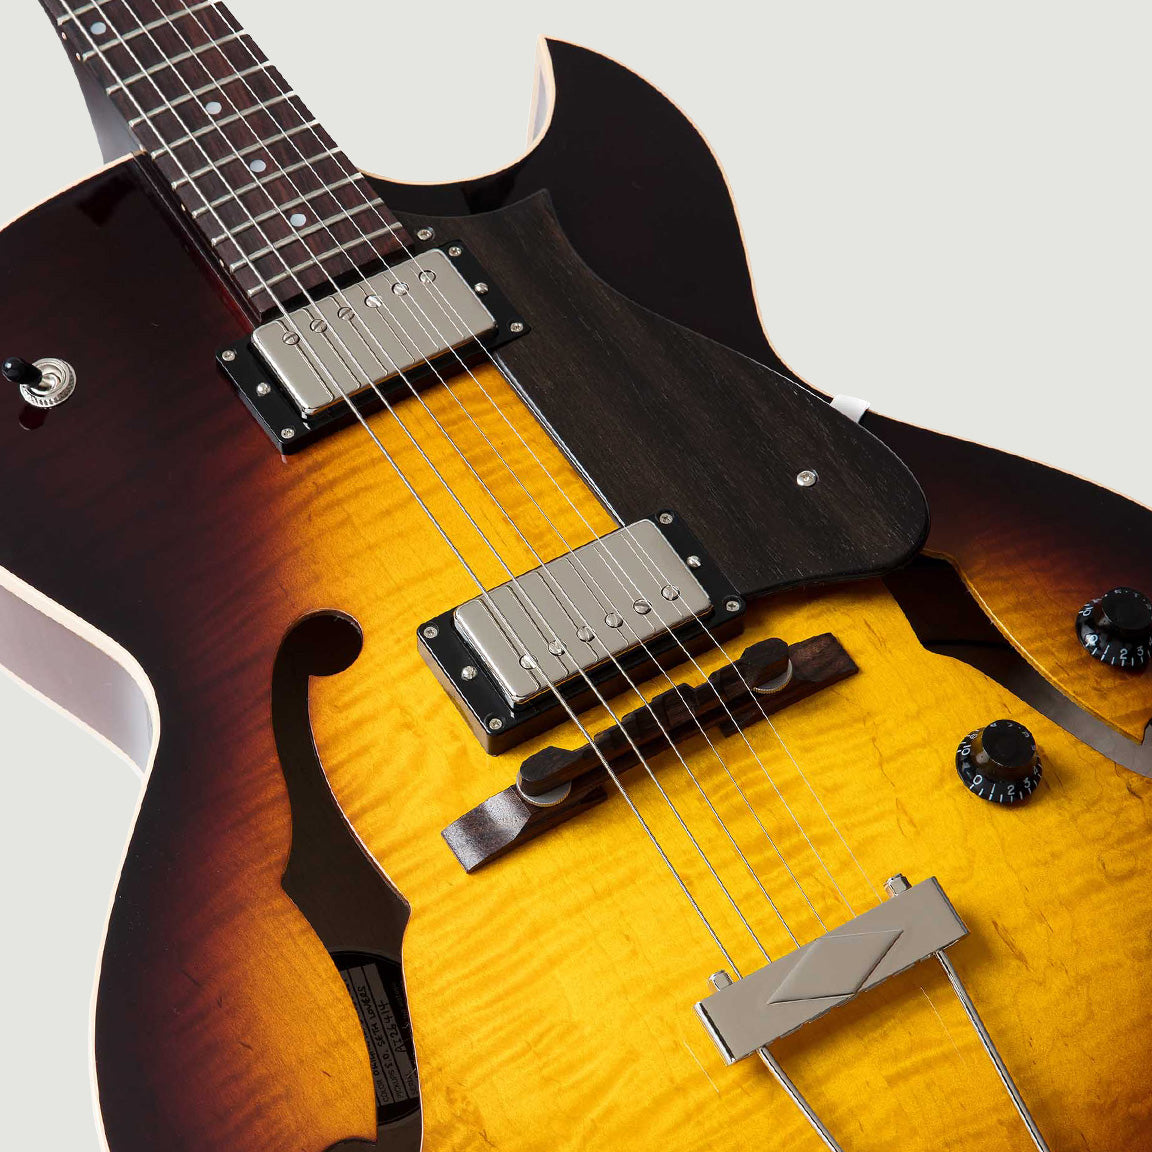 H-575 - Hollow Body Electric Guitar | Heritage Guitars